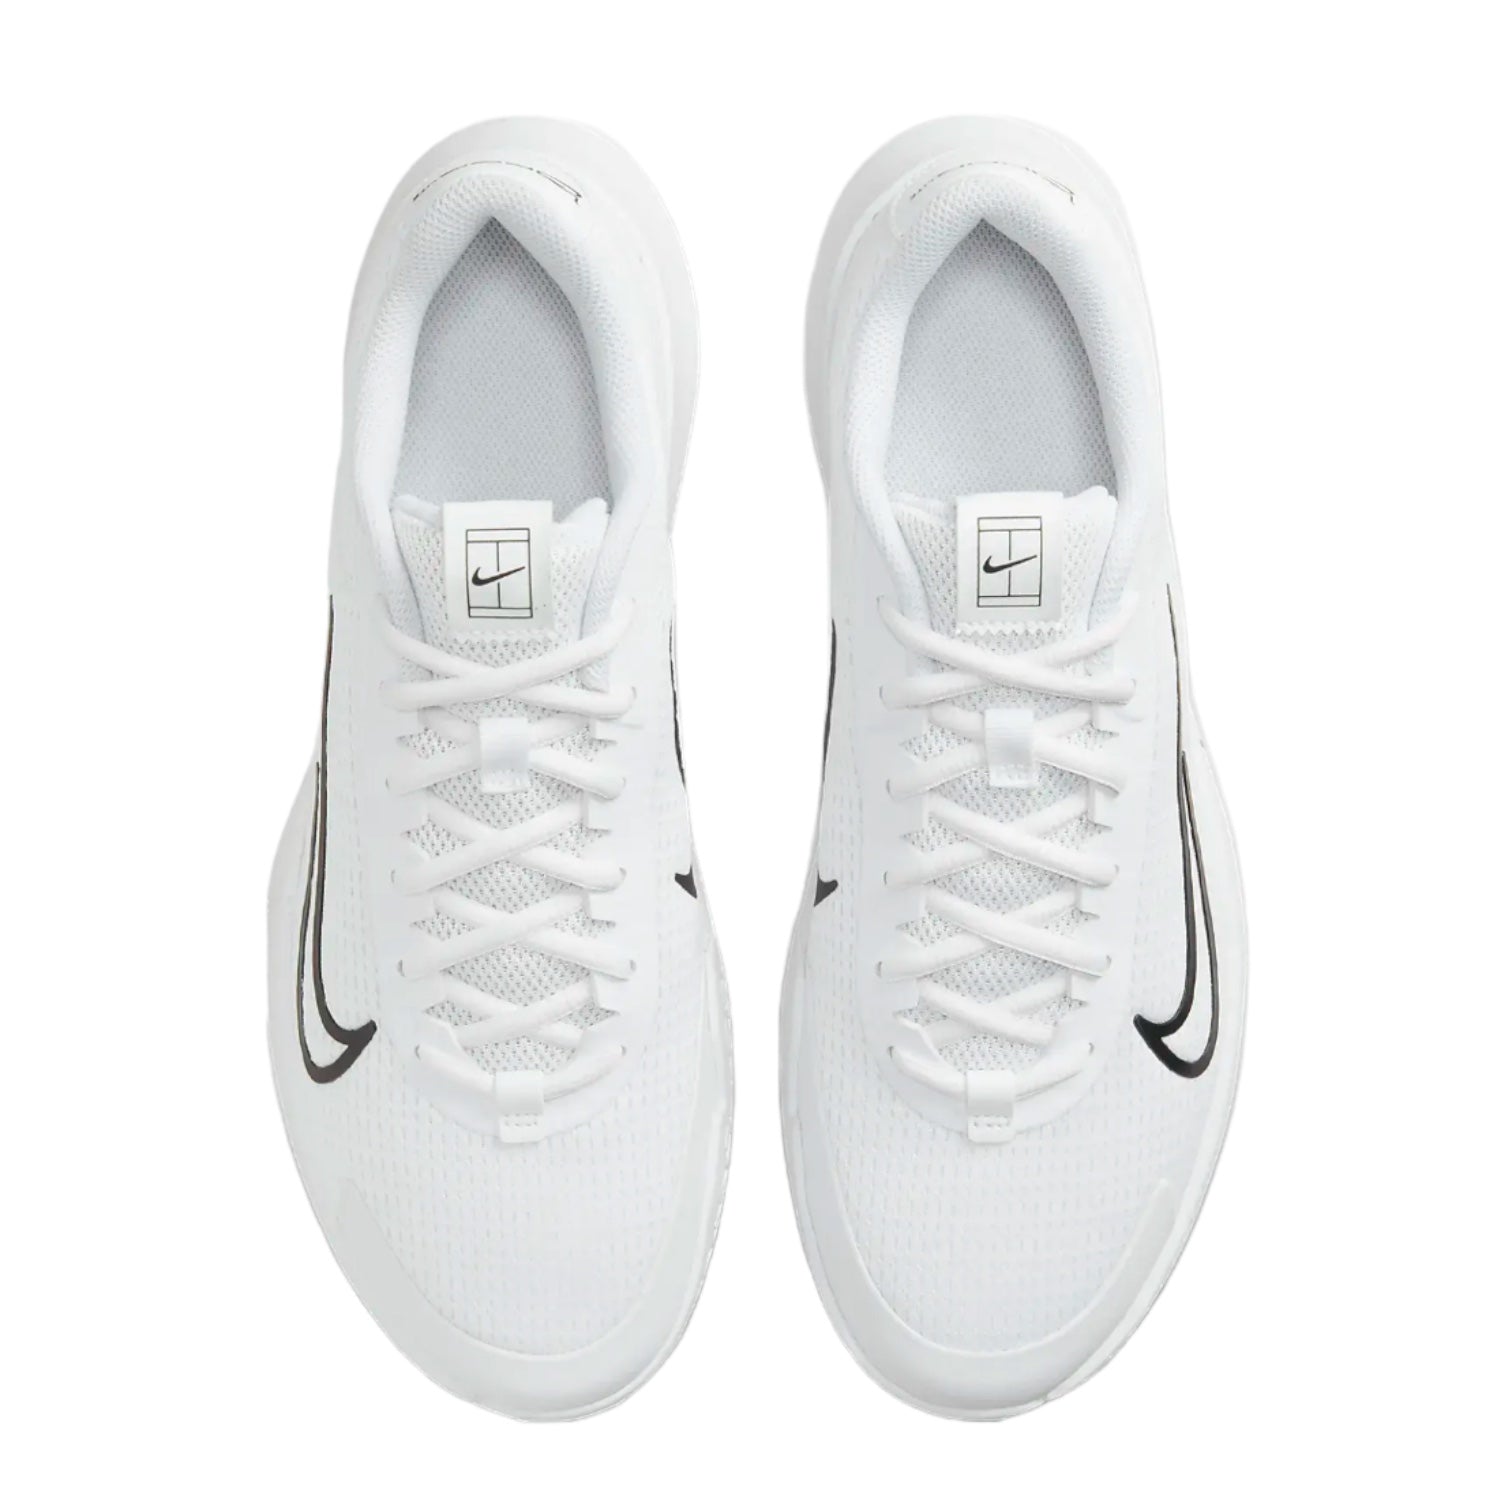 Nike Vapor Lite 2 (White/Black)